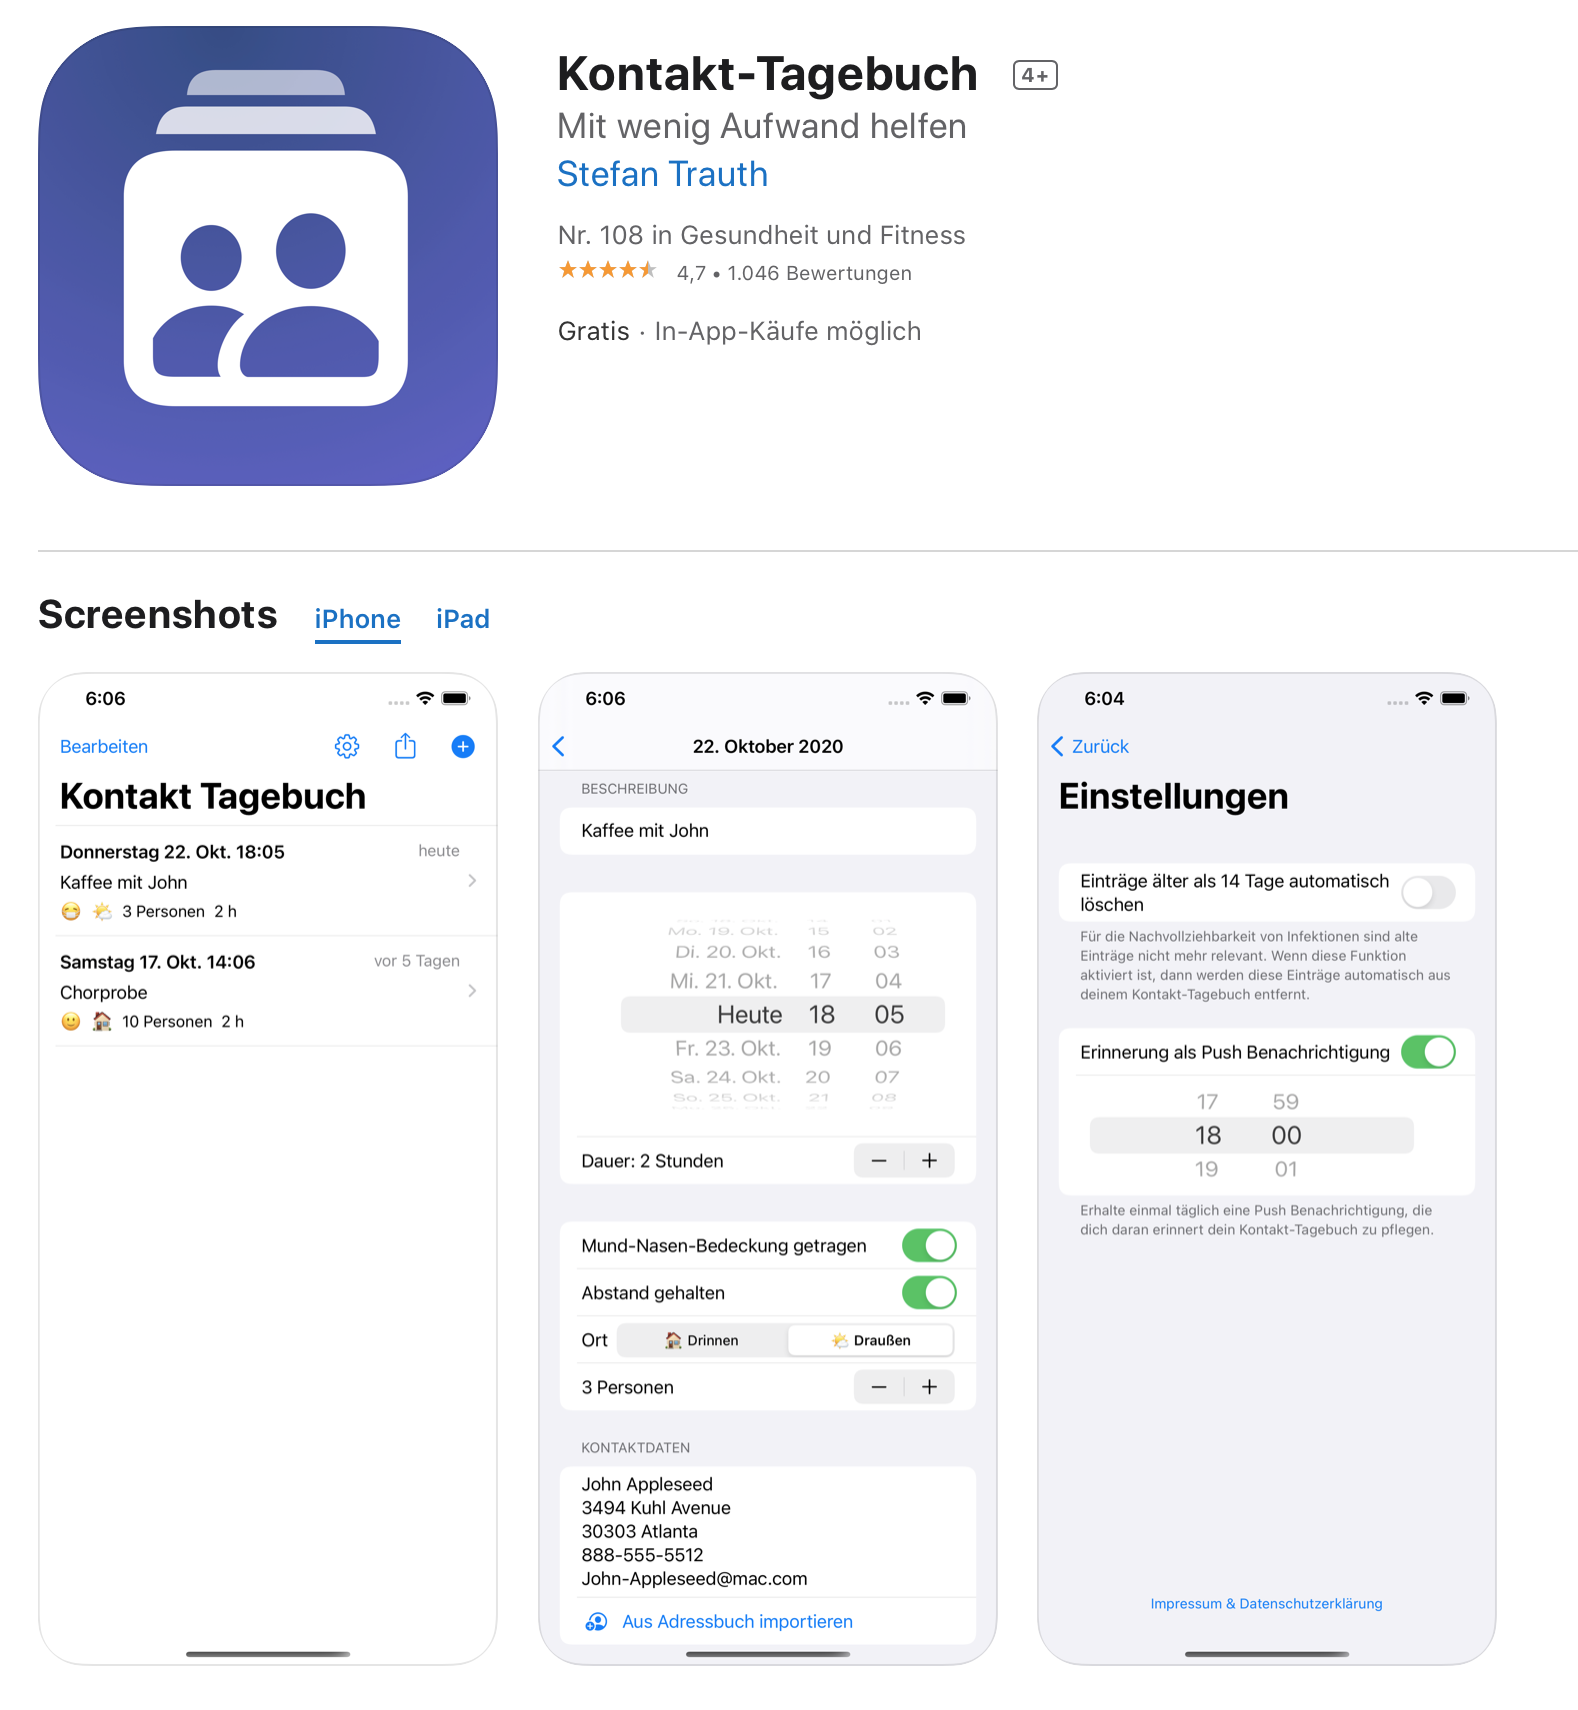 Kontakt Tagebuch im App Store